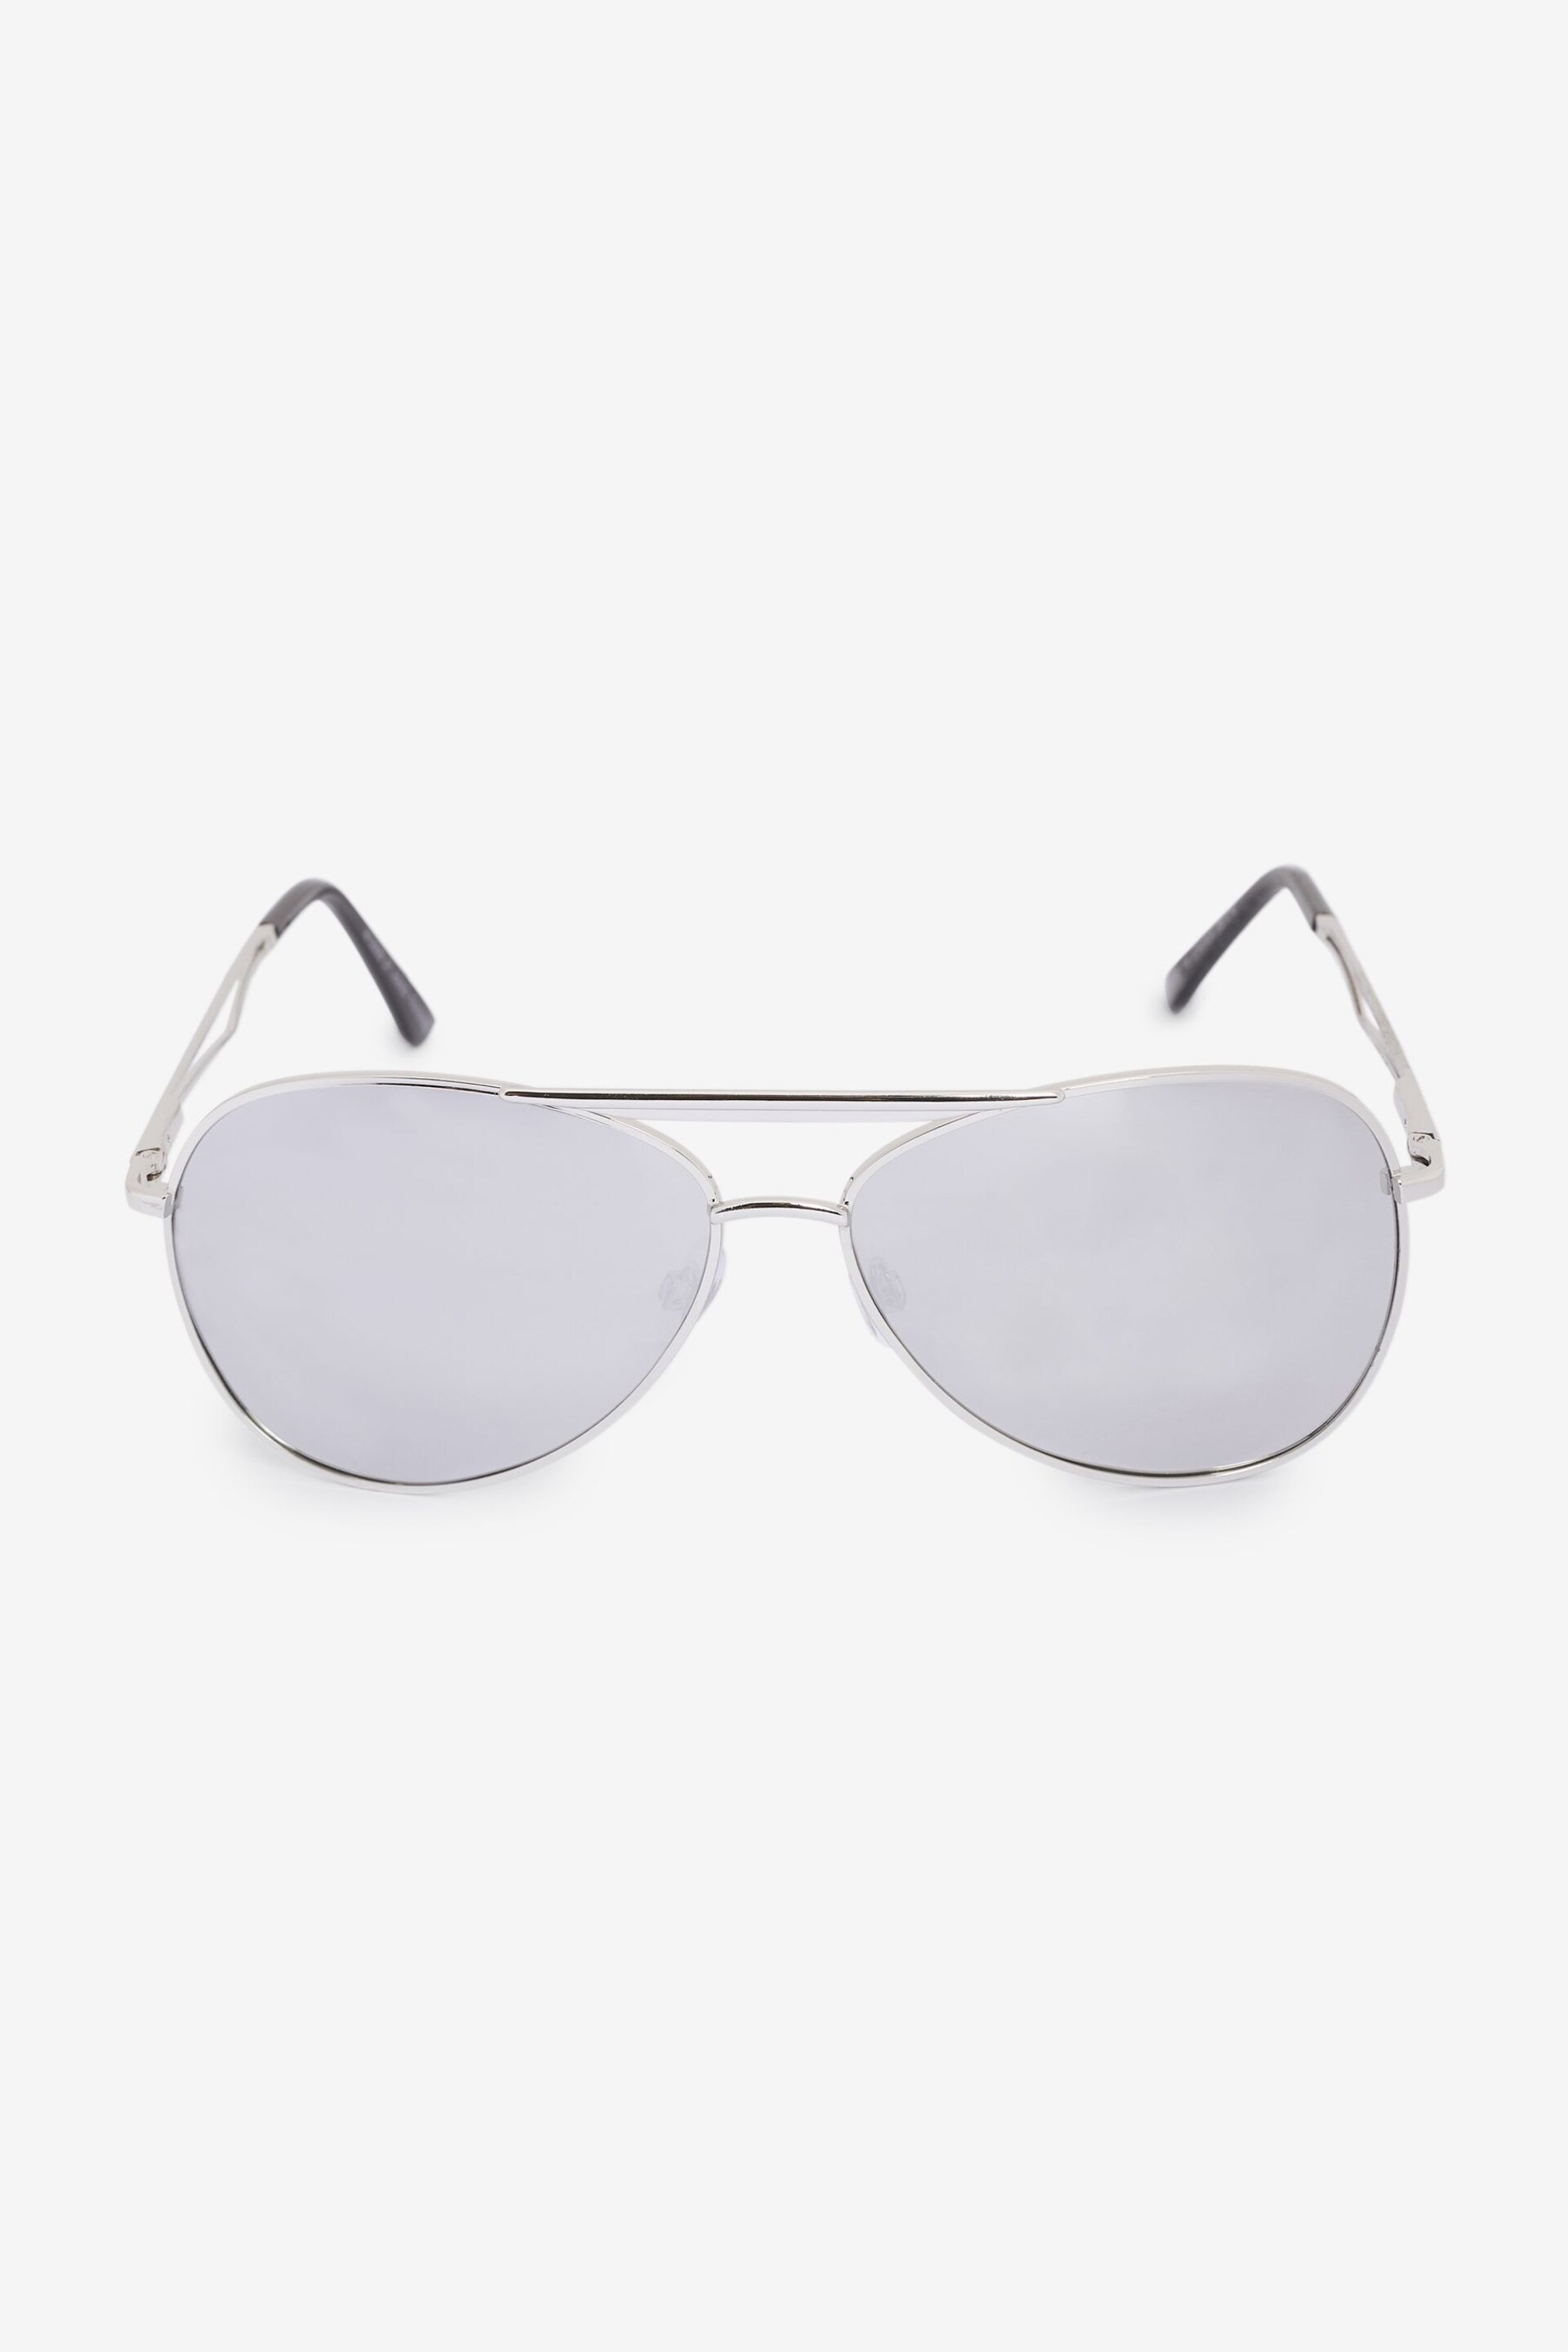 Silver Aviator Style Polarised Sunglasses - Image 3 of 3